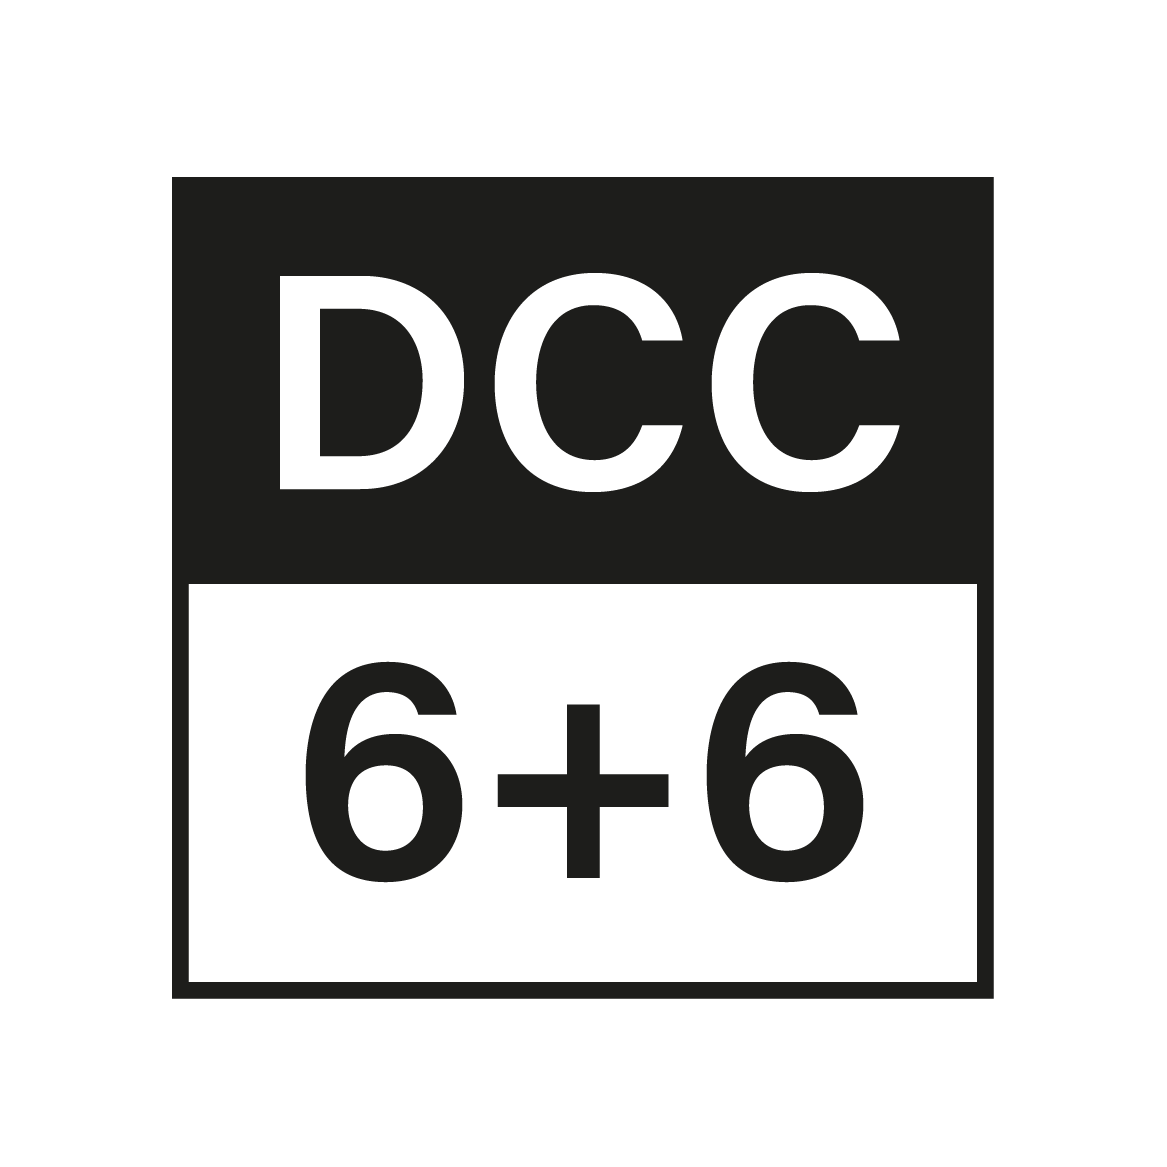 DCC_6_6_Pin